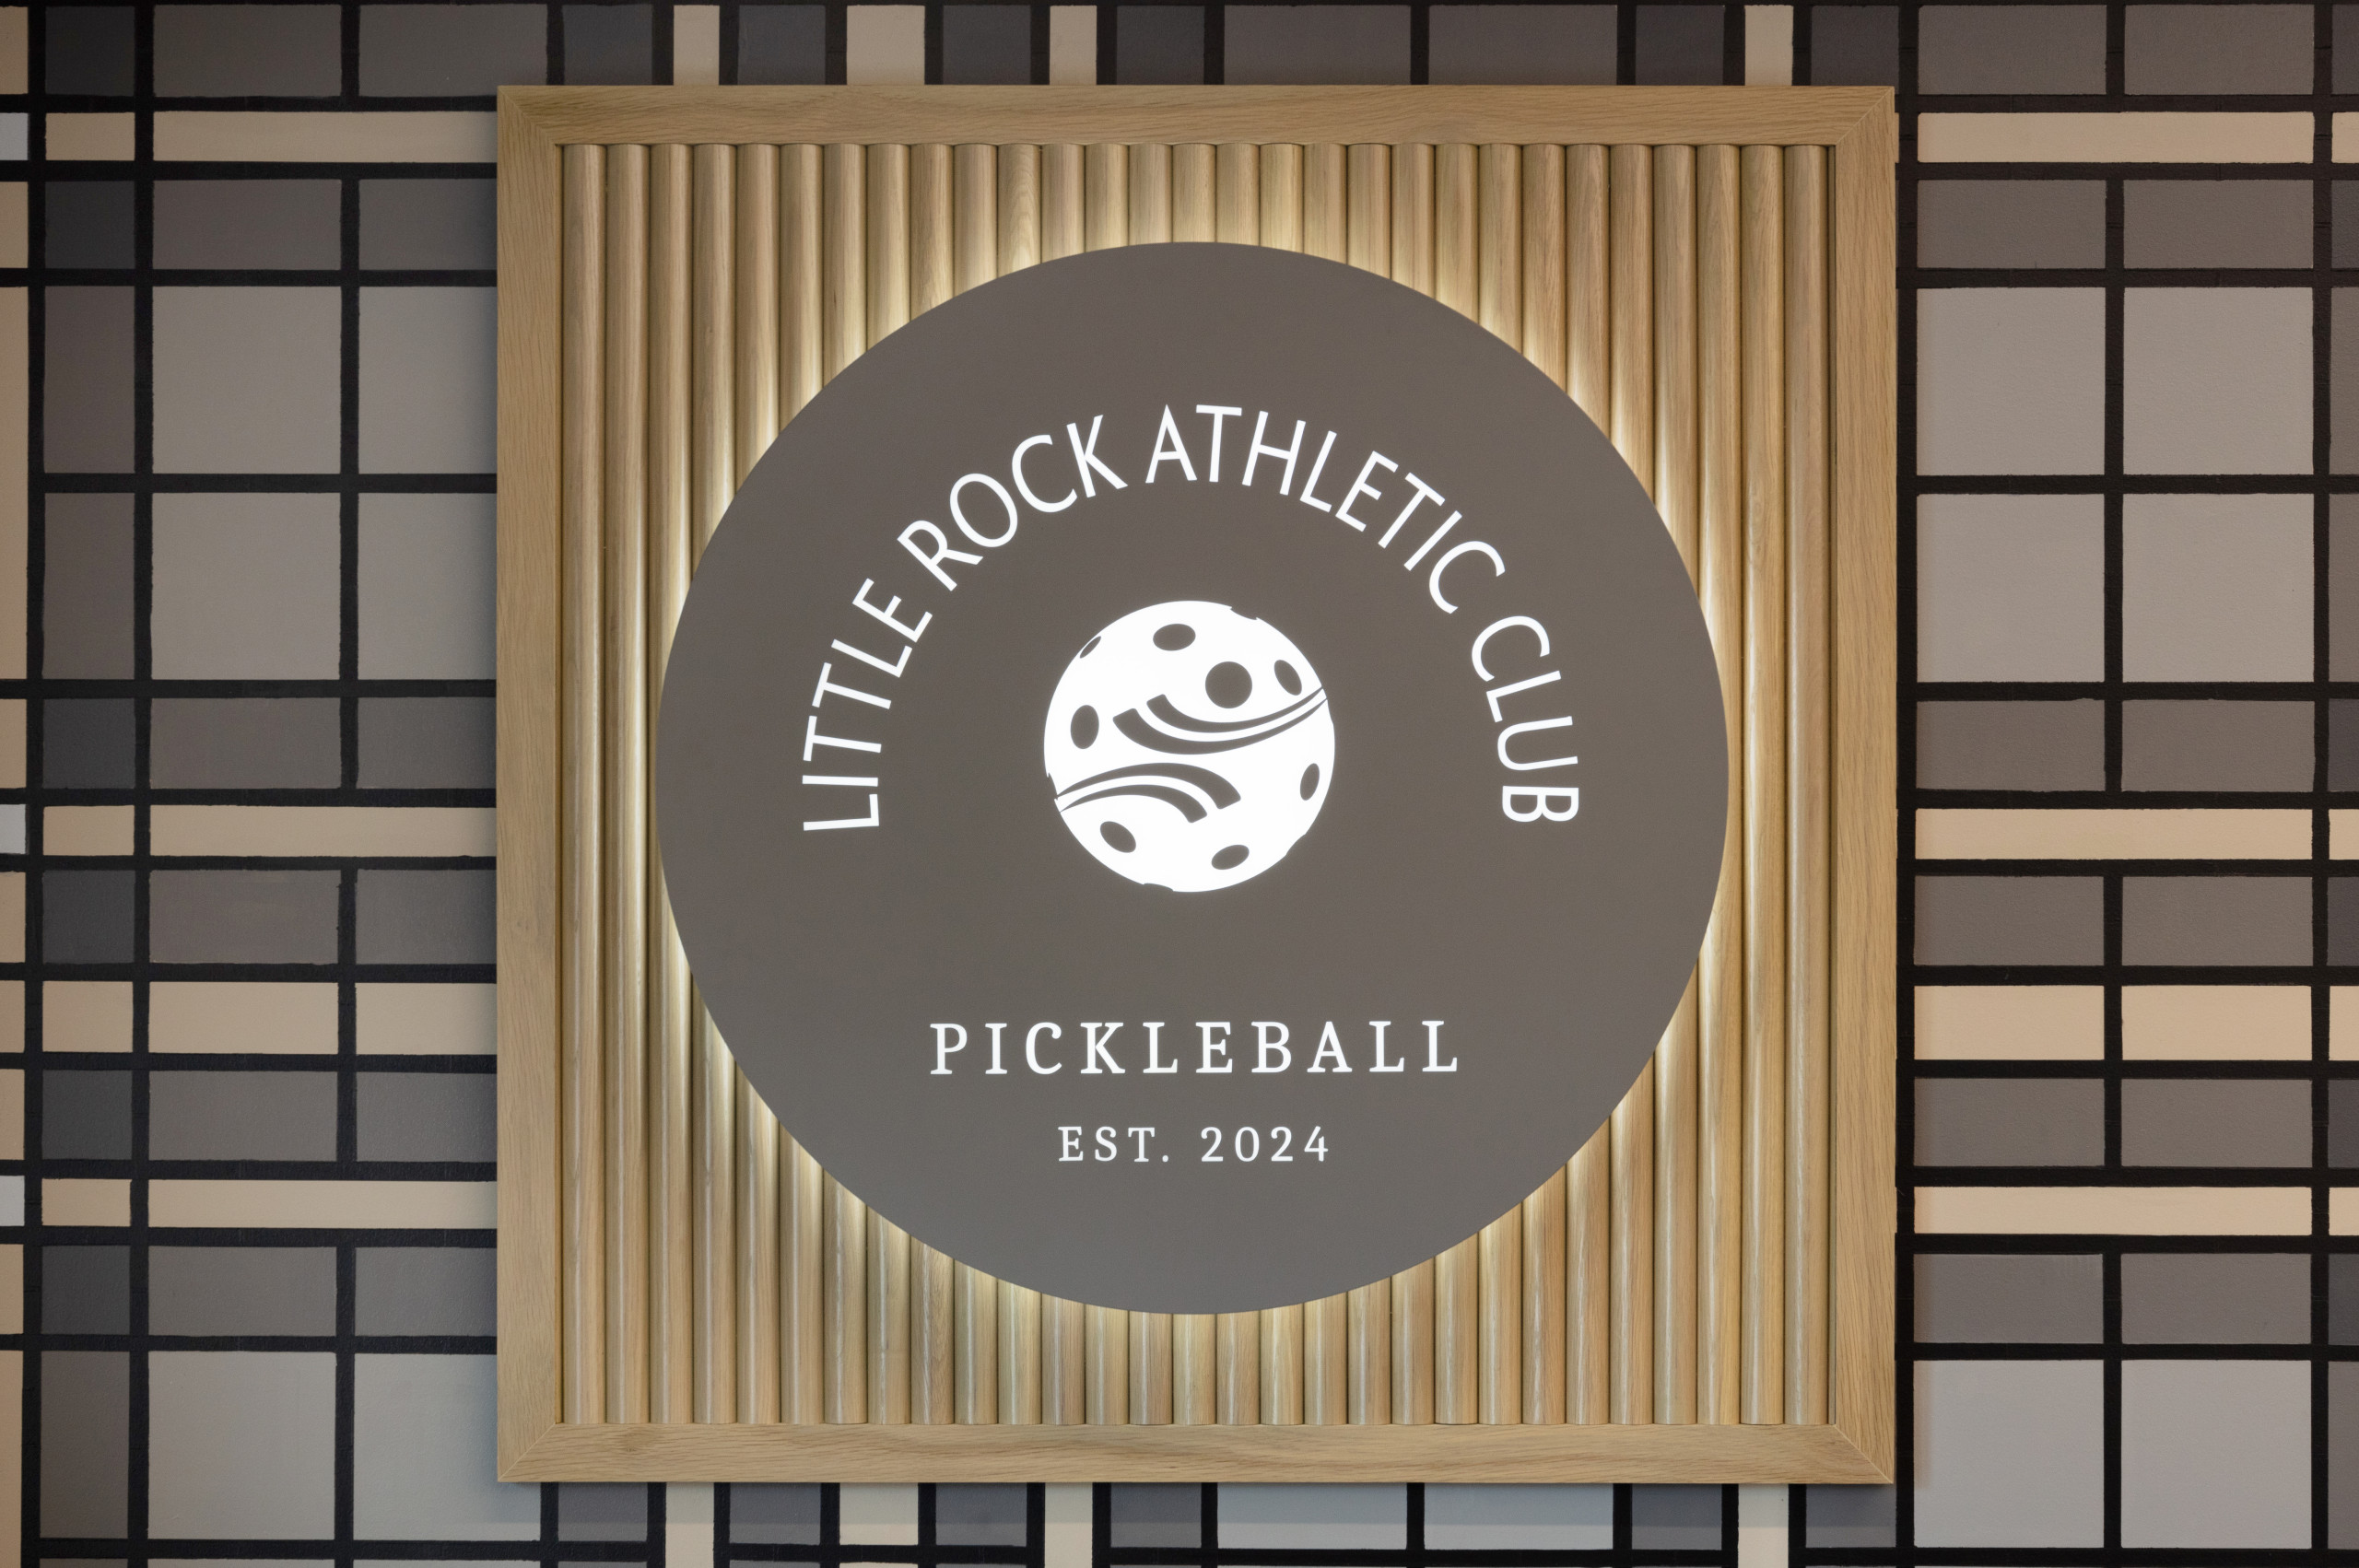 Little Rock Athletic Club Pickleball